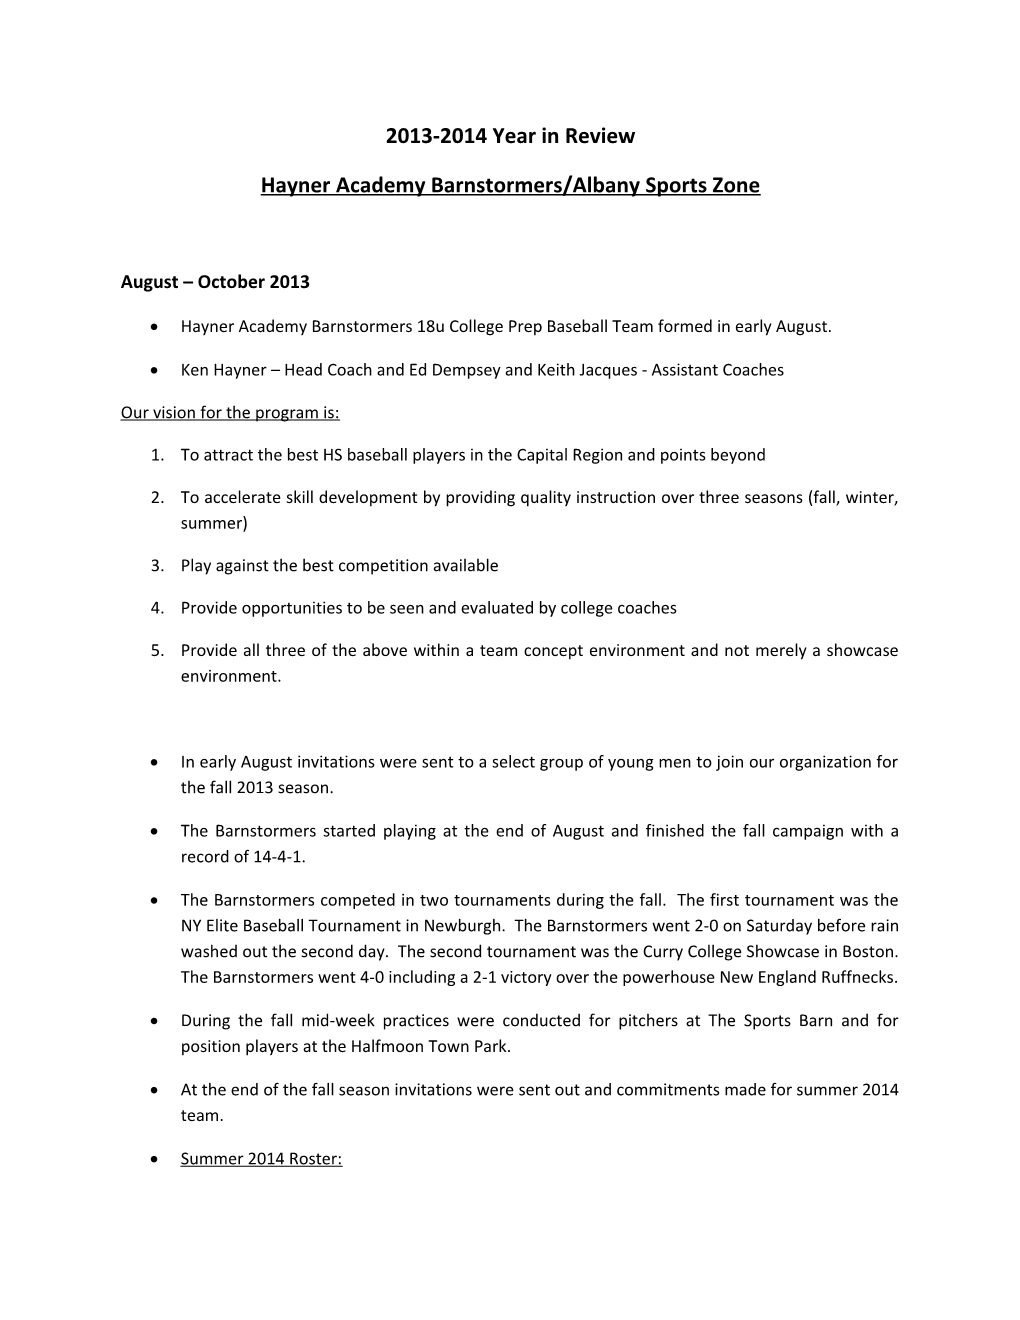 Hayner Academy Barnstormers/Albany Sports Zone